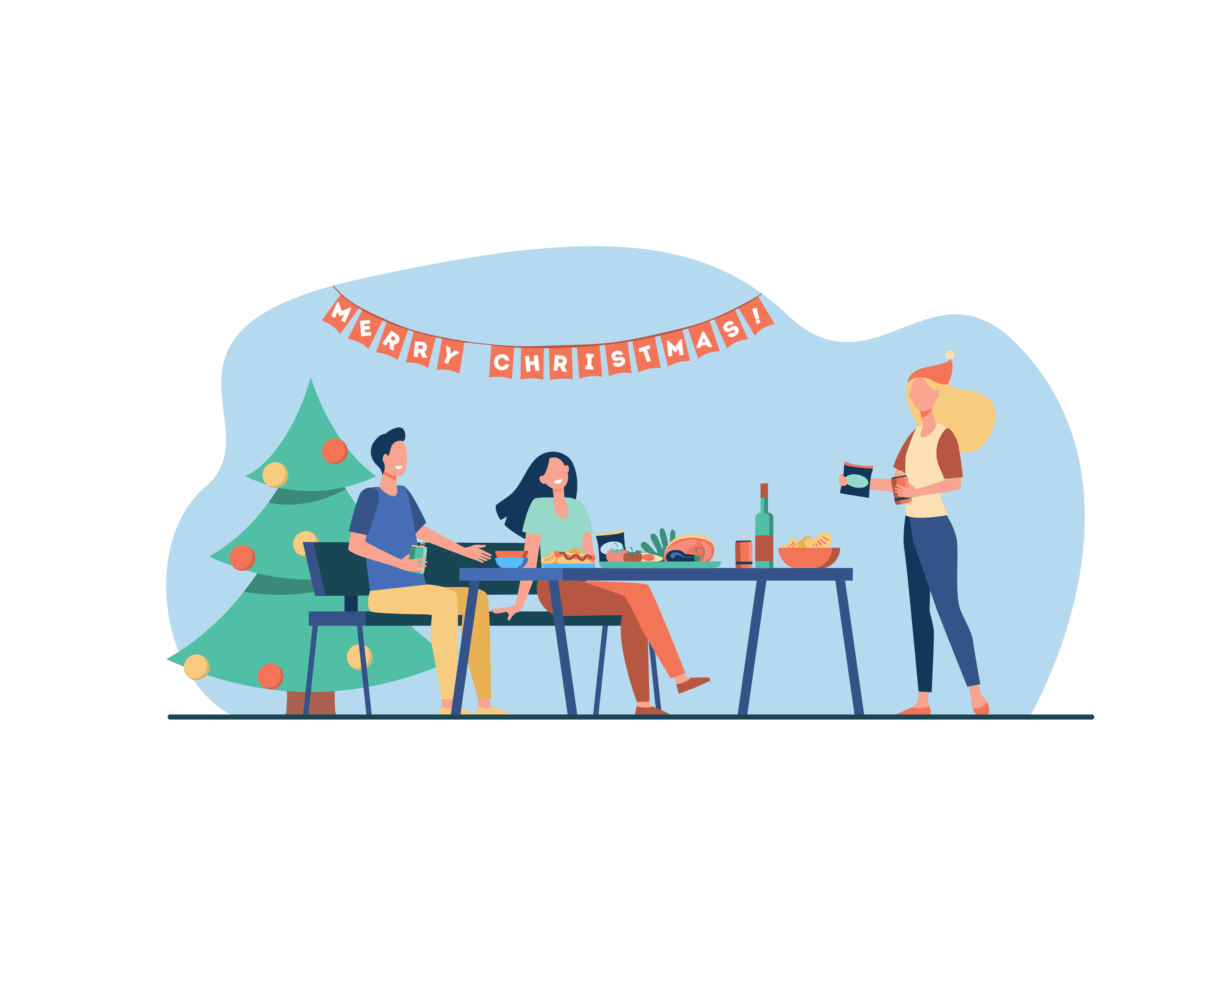 Illustration of people enjoying a Christmas feast